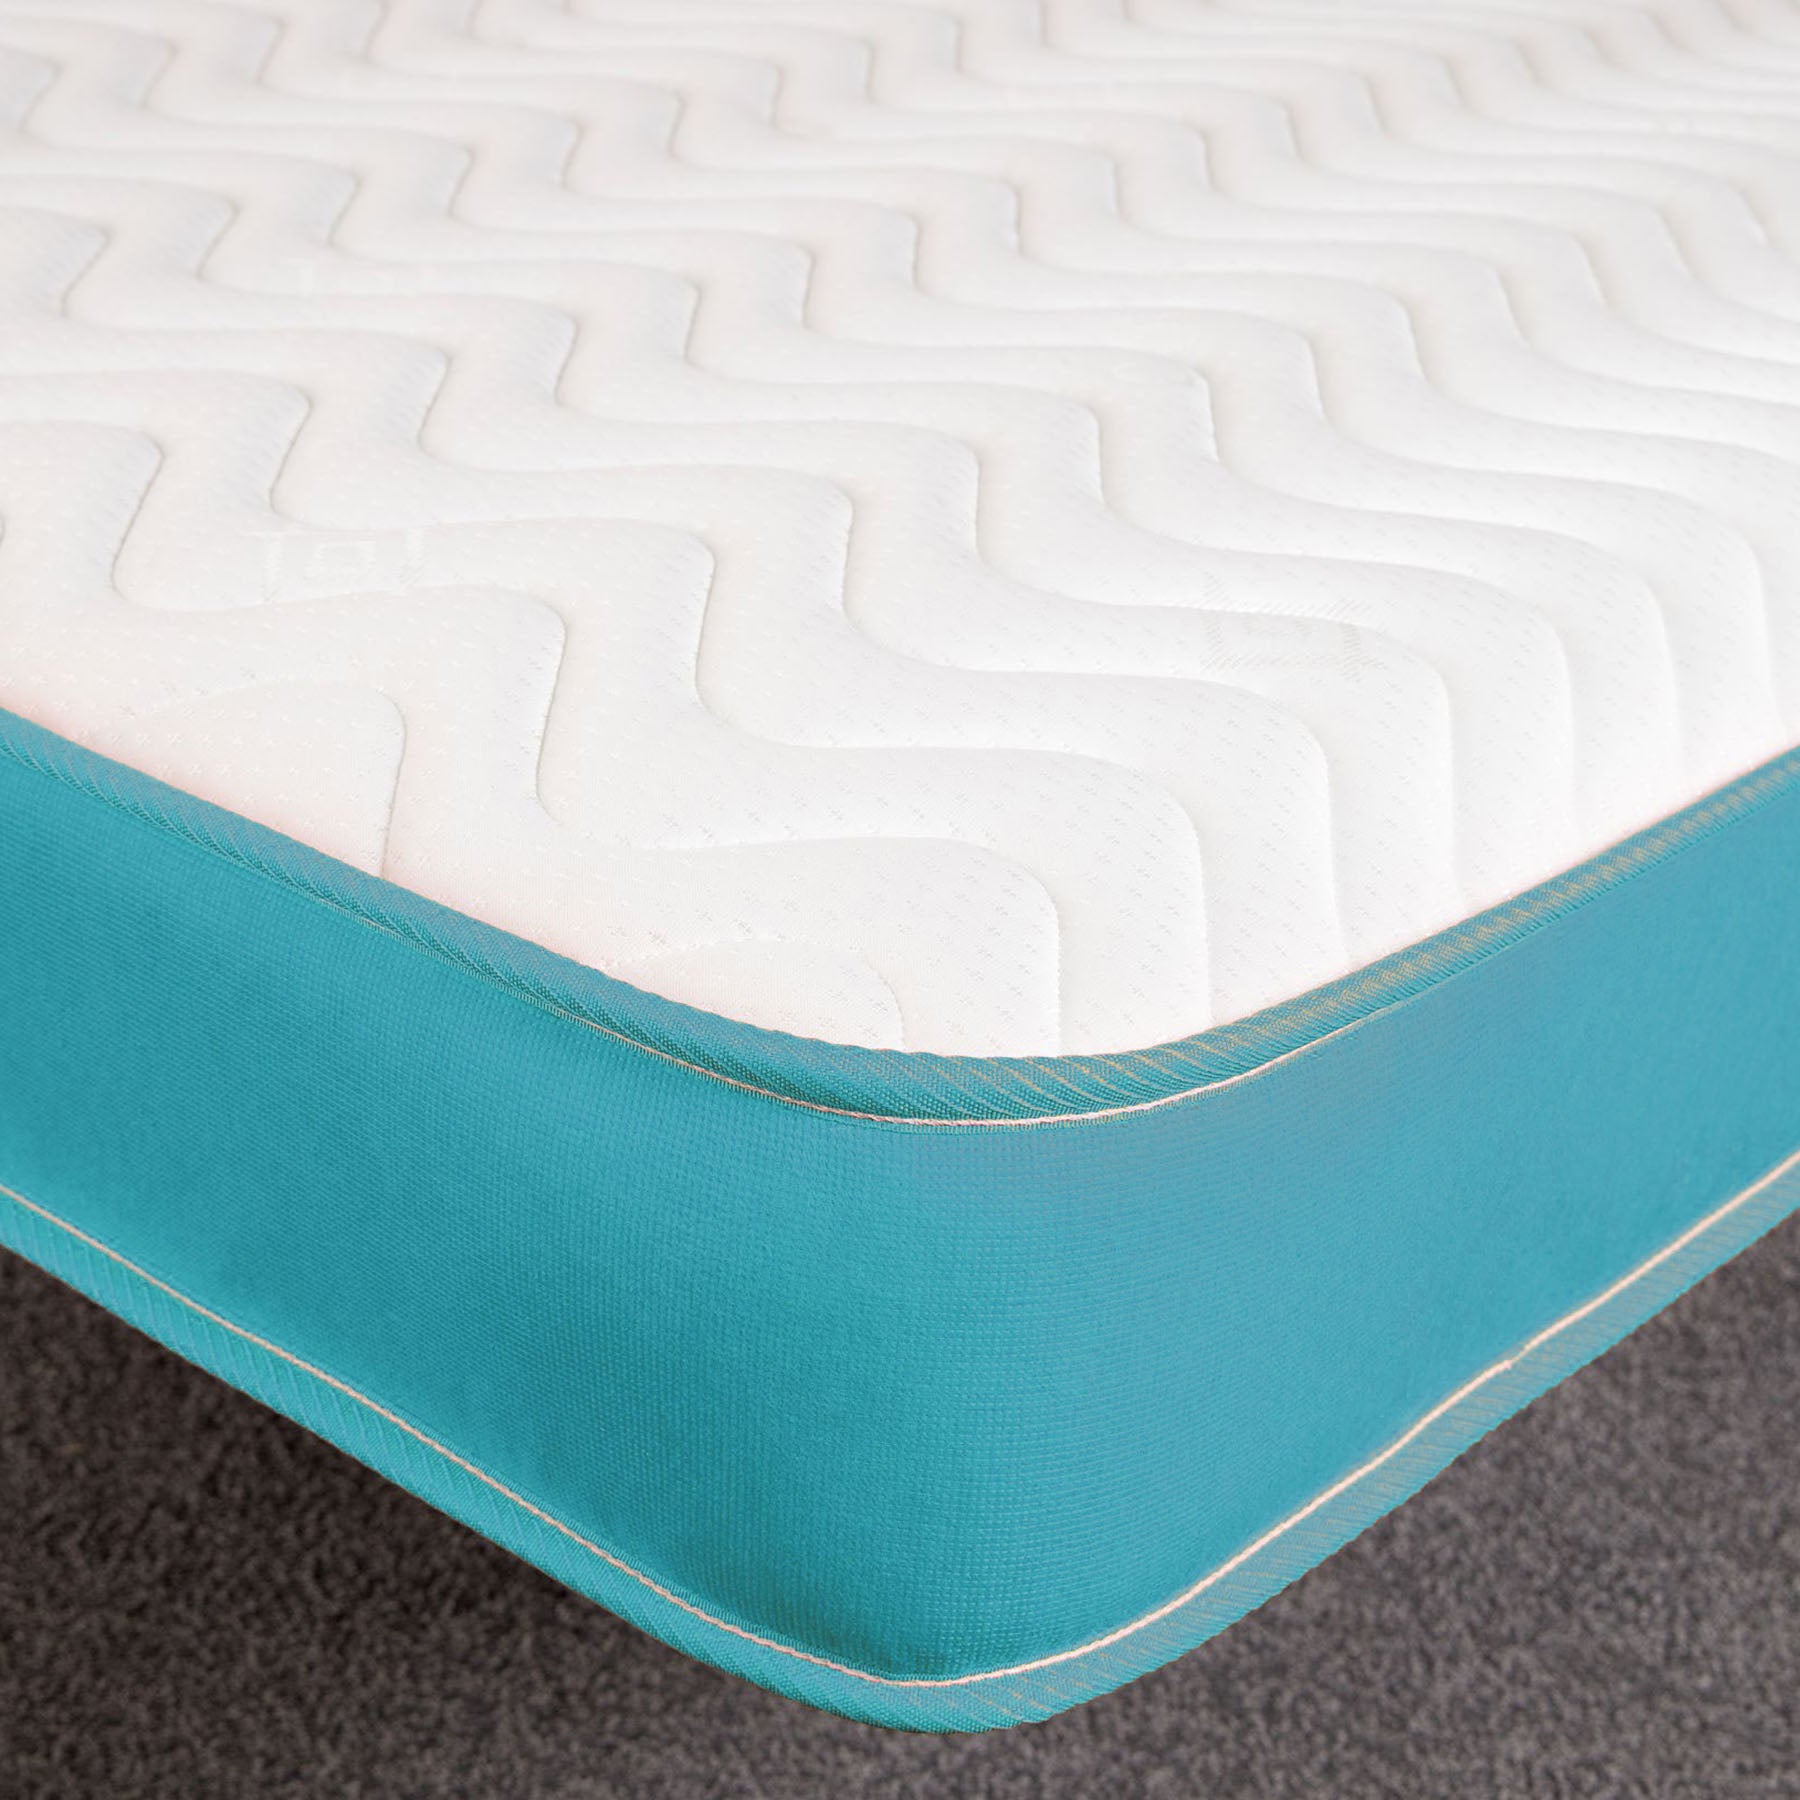 Starlight Beds™ 7" Deep Cool touch Luxurious soft Finish Memory Foam & Hybrid Spring Teal Blue Border Mattress